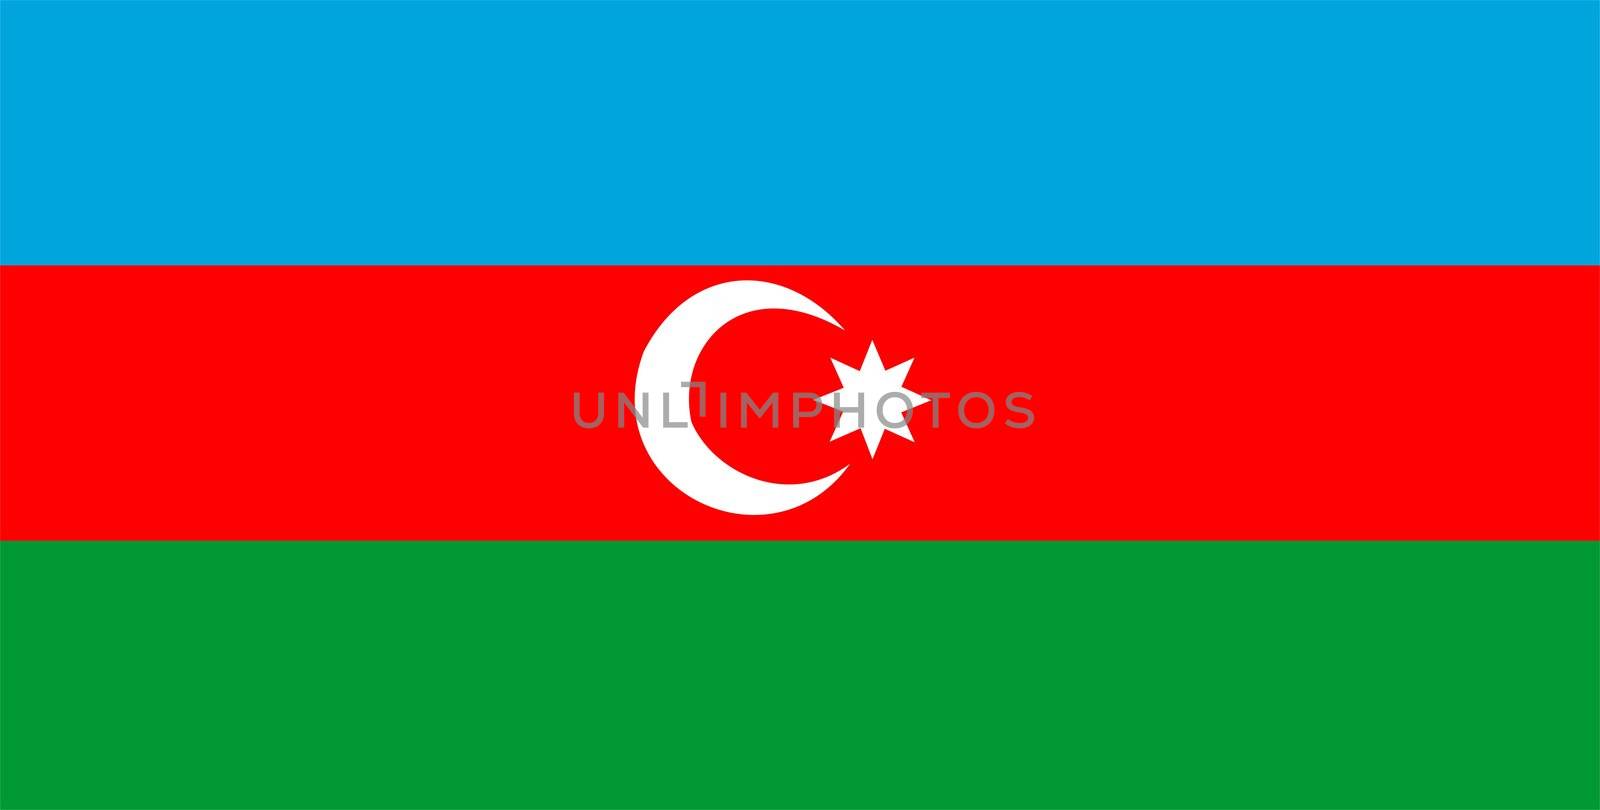 2D illustration of the flag of Azerbaijan vector